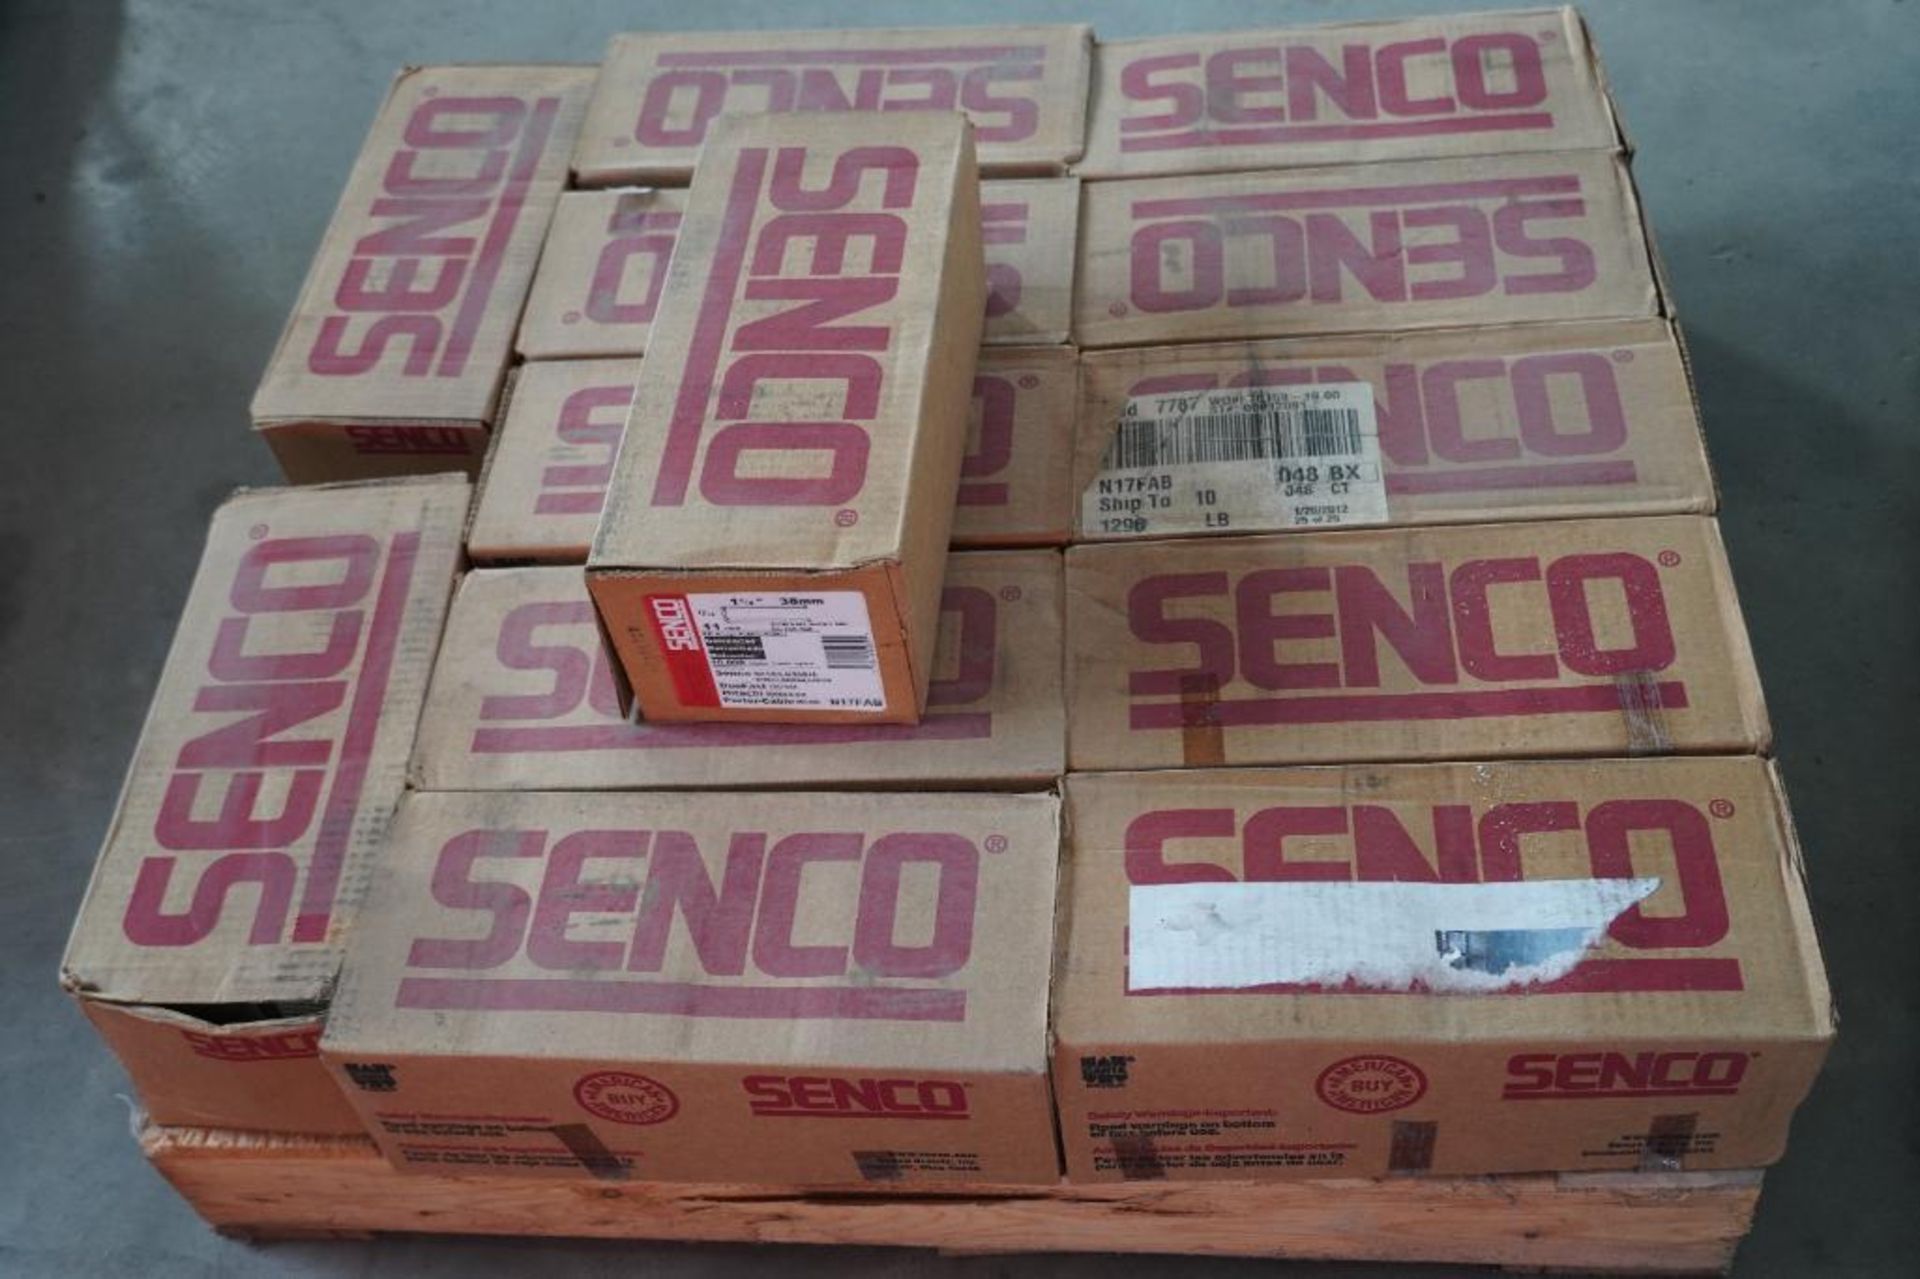 13 Cases of Senco Staples